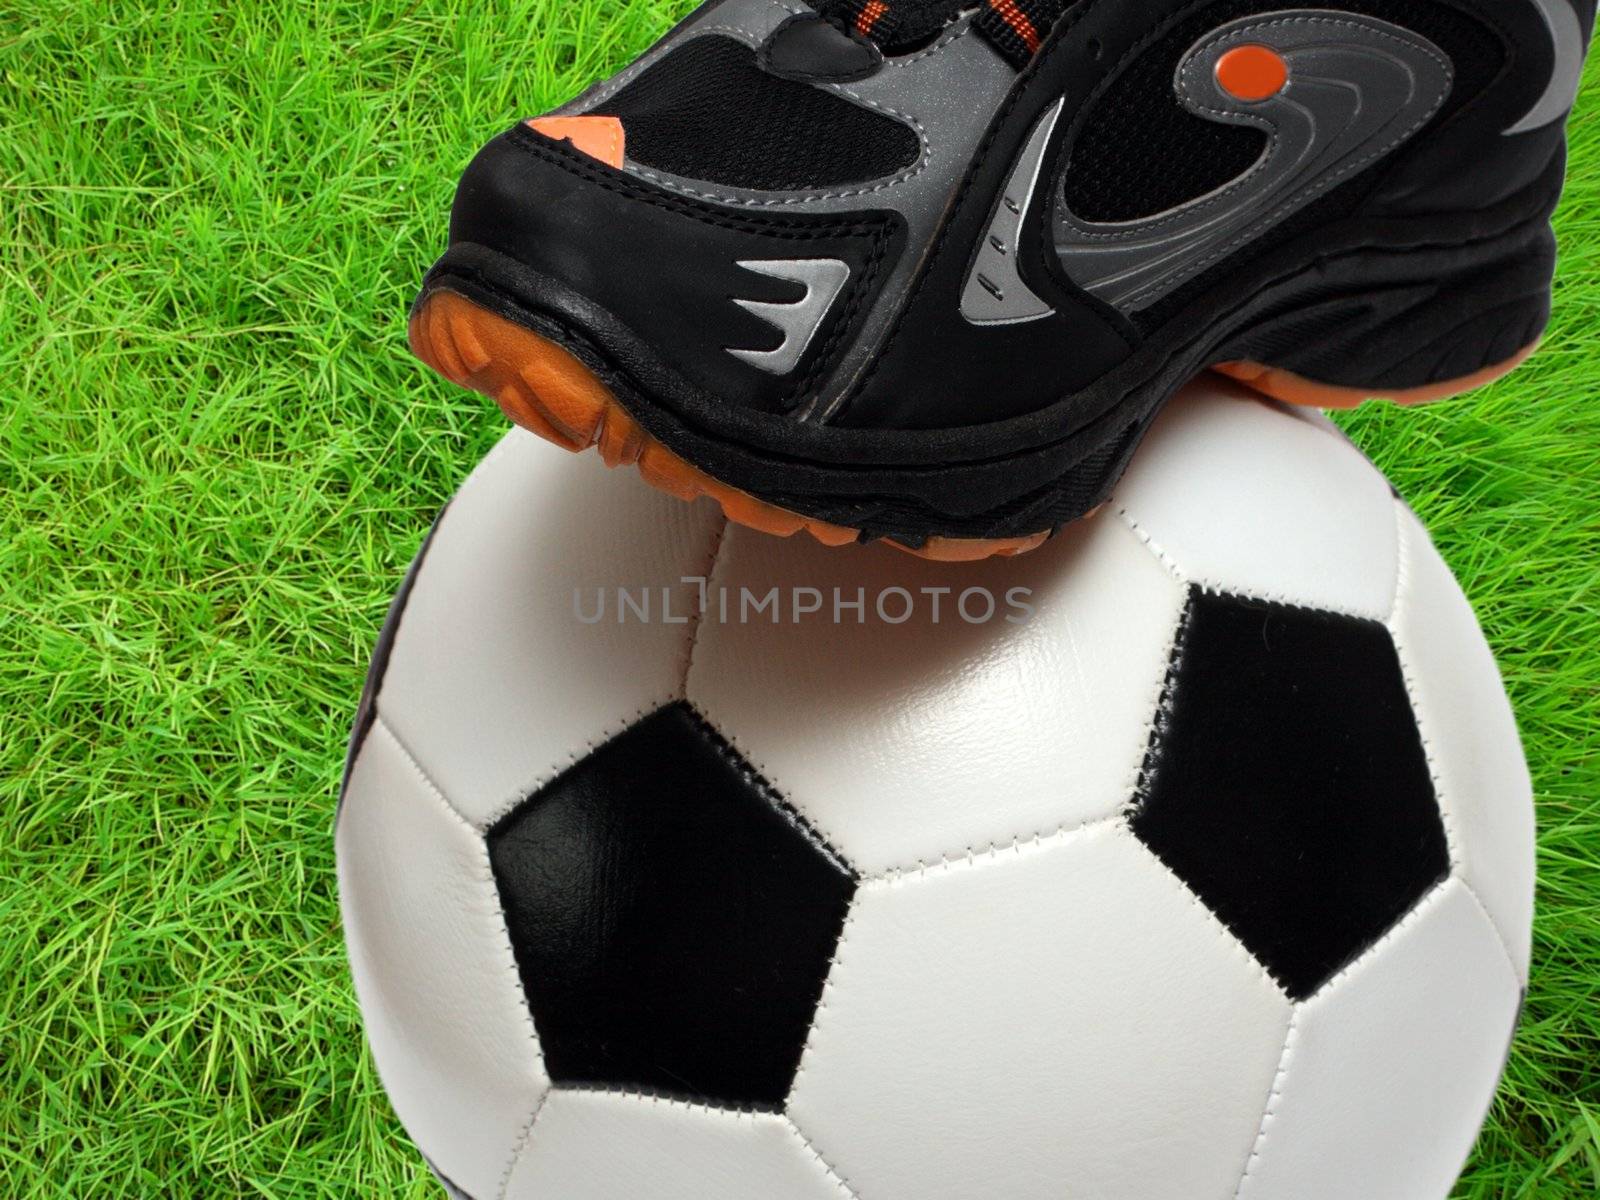 football shoe and soccer ball close-up over green grass field